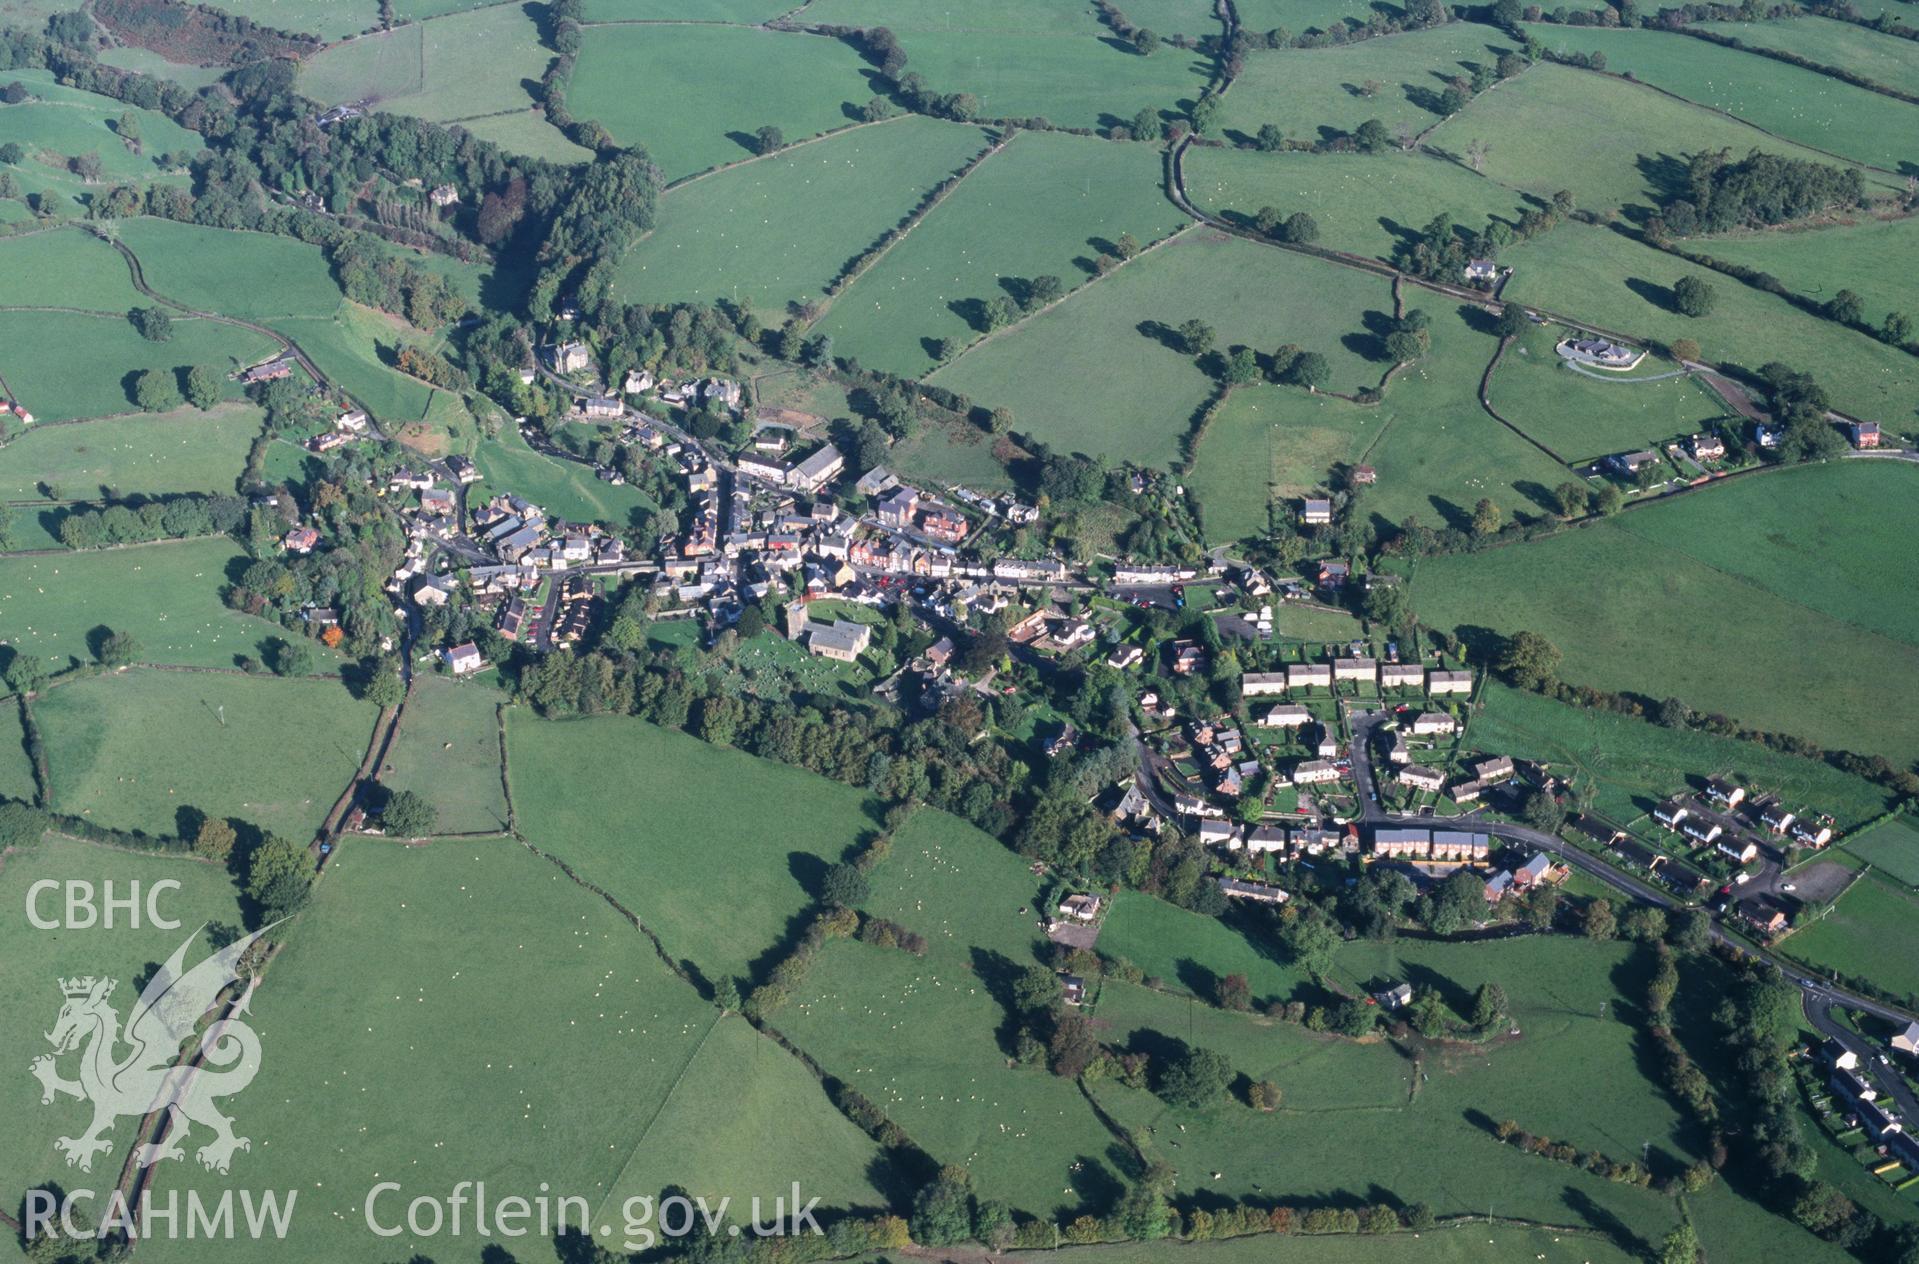 Slide of RCAHMW colour oblique aerial photograph of Llanrhaeadr Ym Mochnant, taken by T.G. Driver, 17/10/2000.